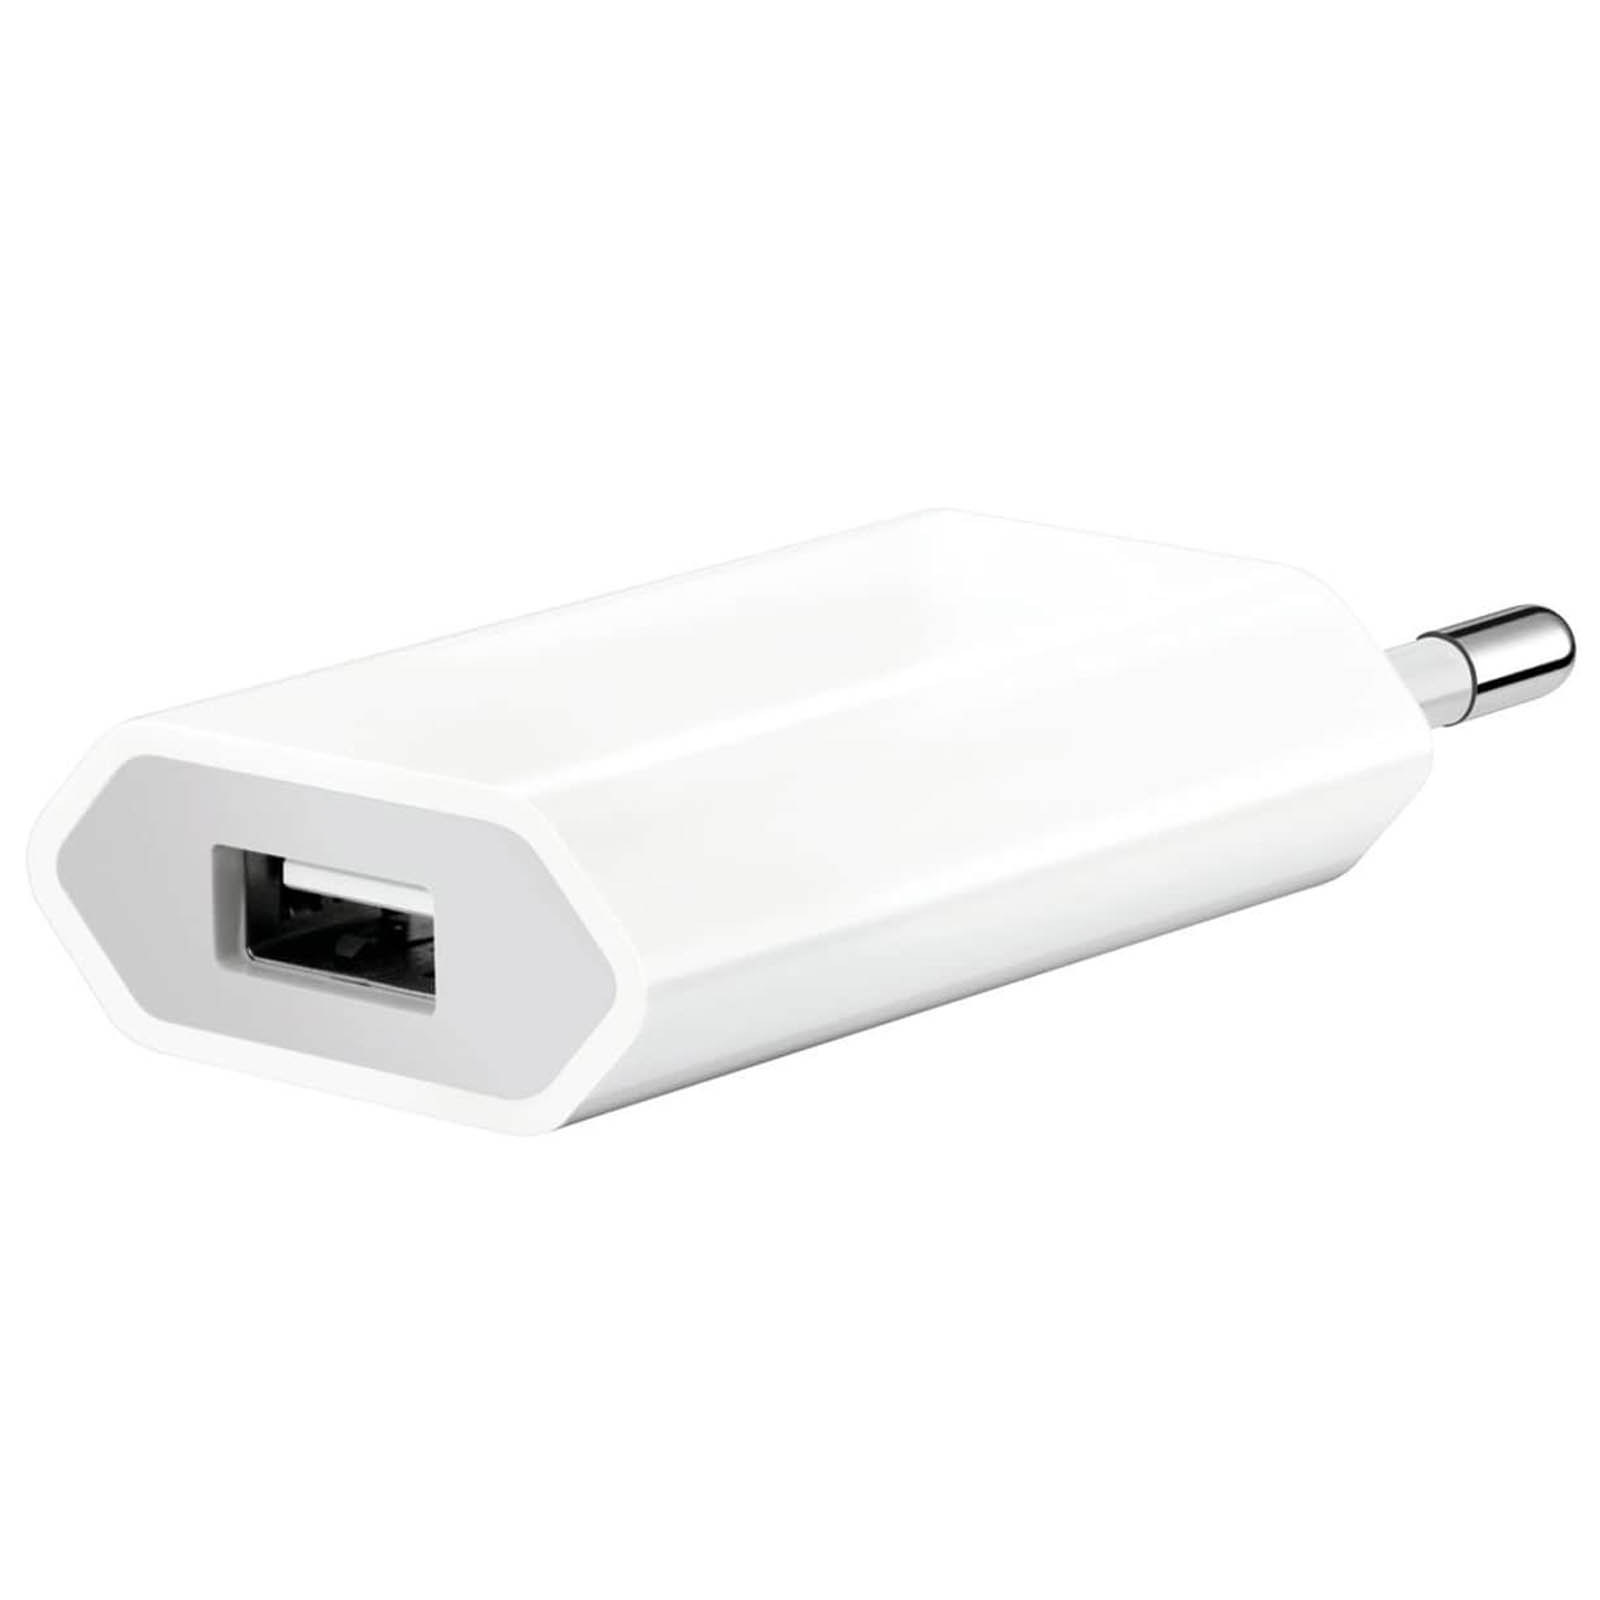 AVIZAR Netzteil für Apple zum Weiß Wand-Ladegerät 1A 30pin Apple 4s/iPad Netzteile Geräte, 3) (bis Apple